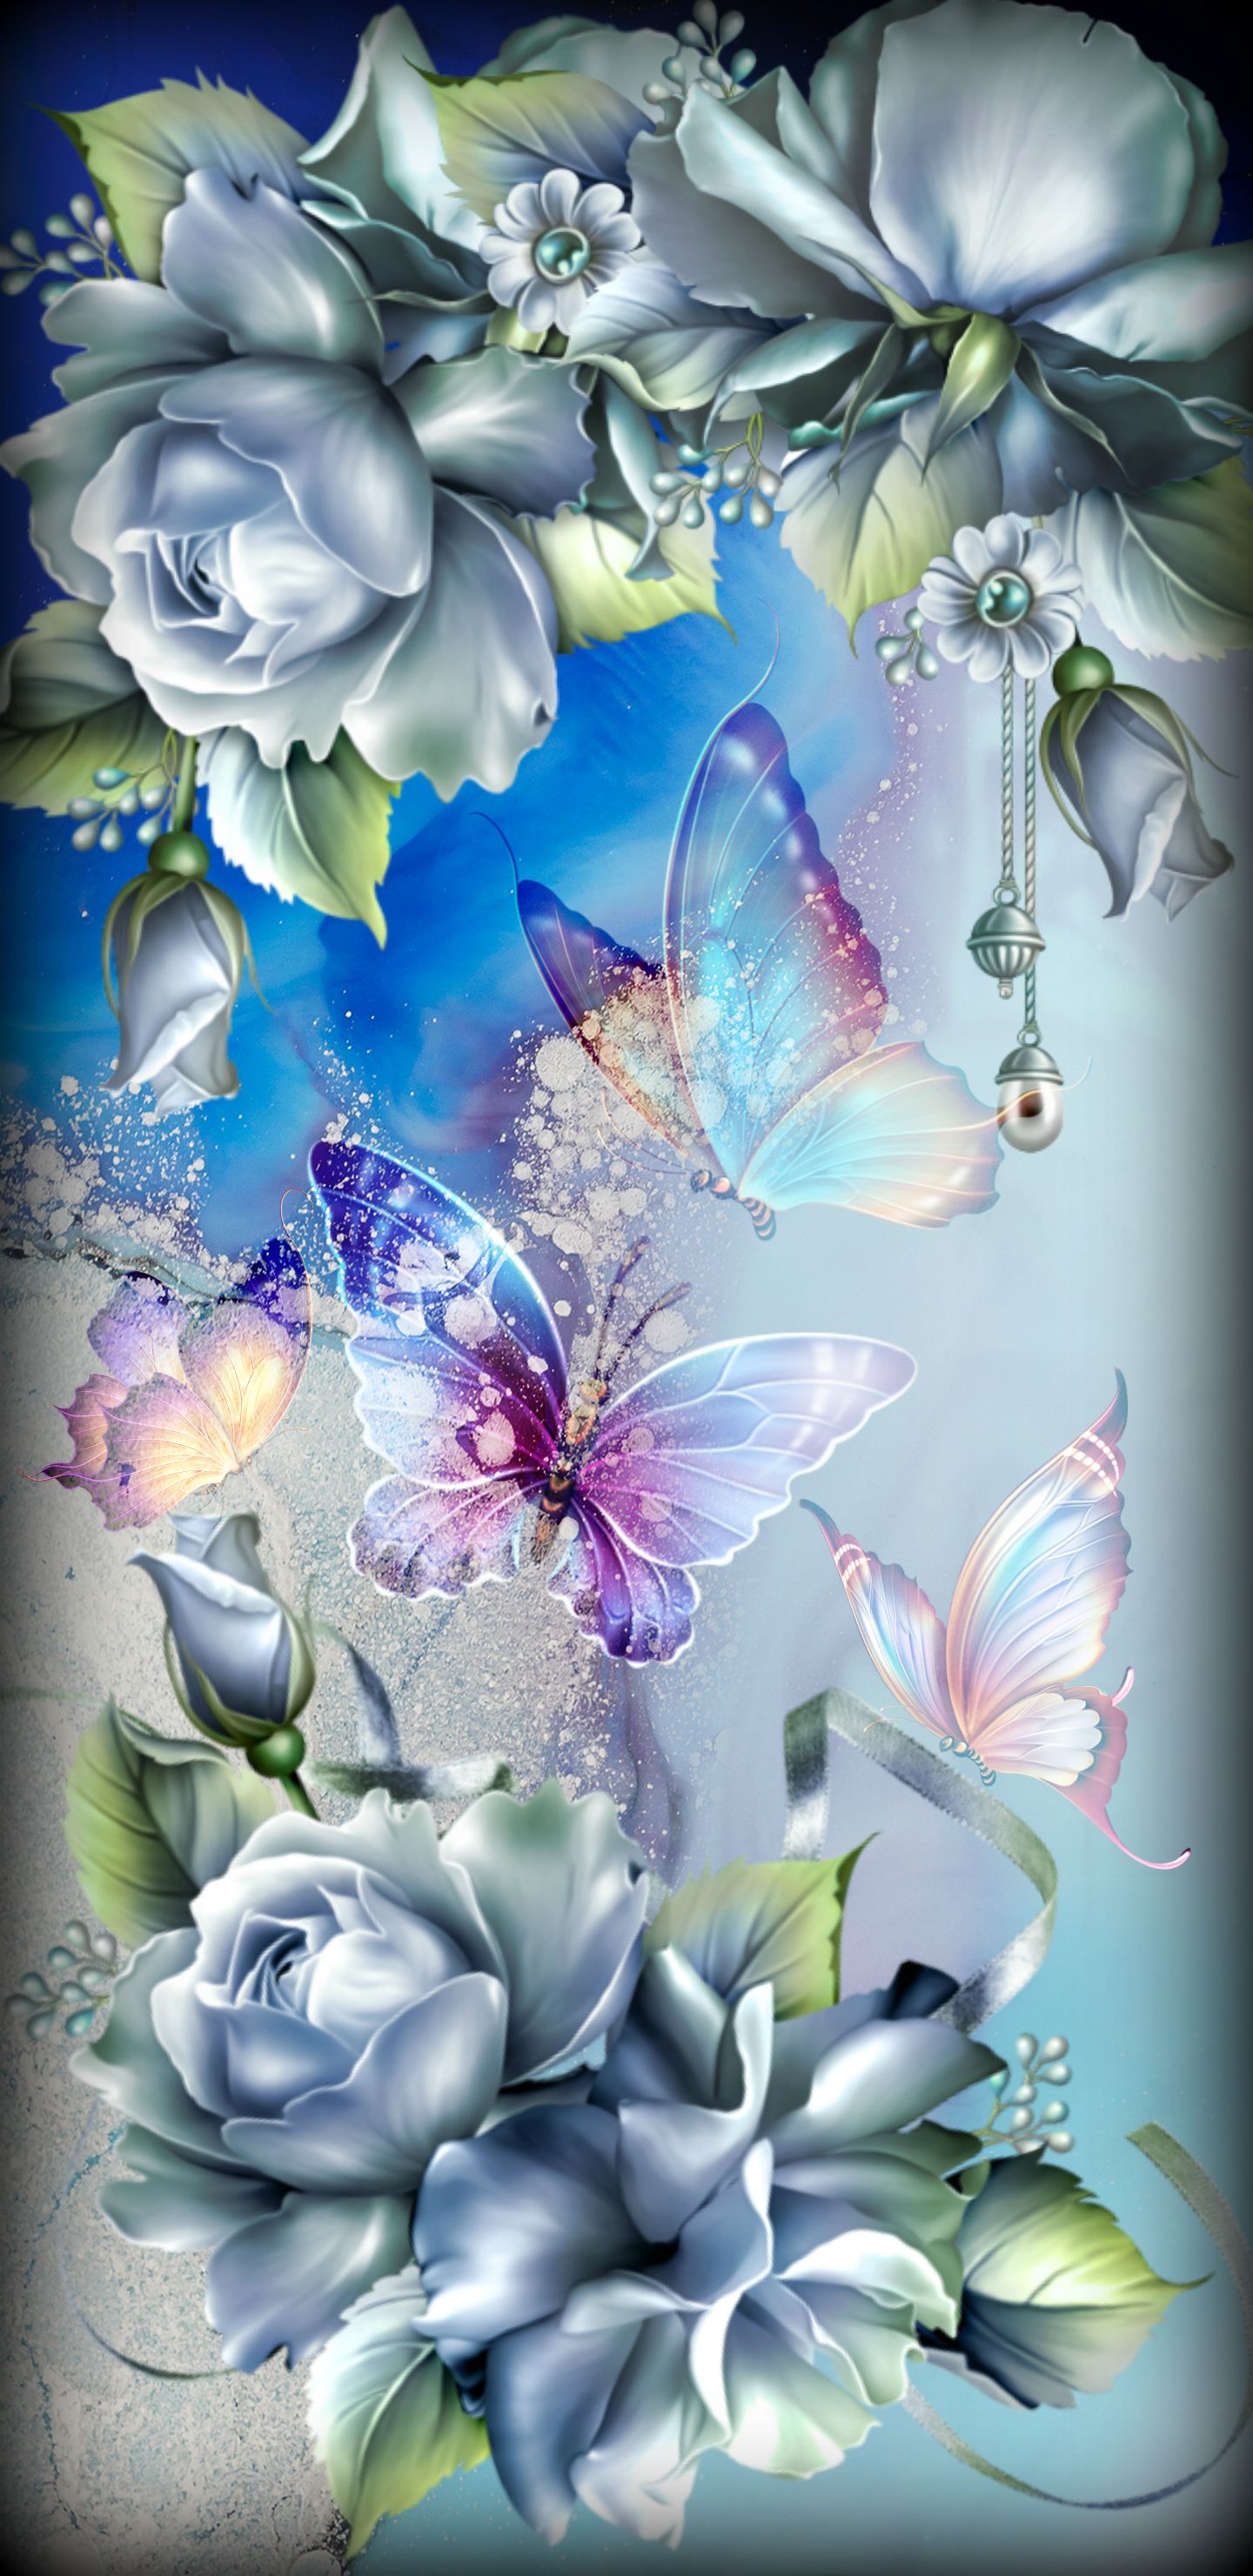 Blue Fantasy. Flower iphone wallpaper, Butterfly wallpaper, Flower phone wallpaper